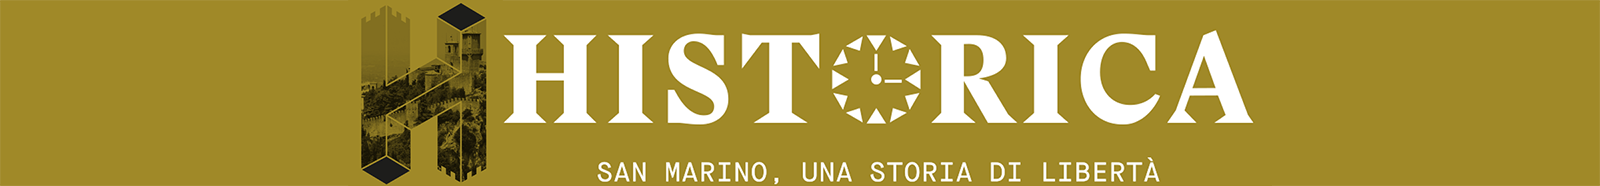 HISTORICA SAN MARINO  Home page